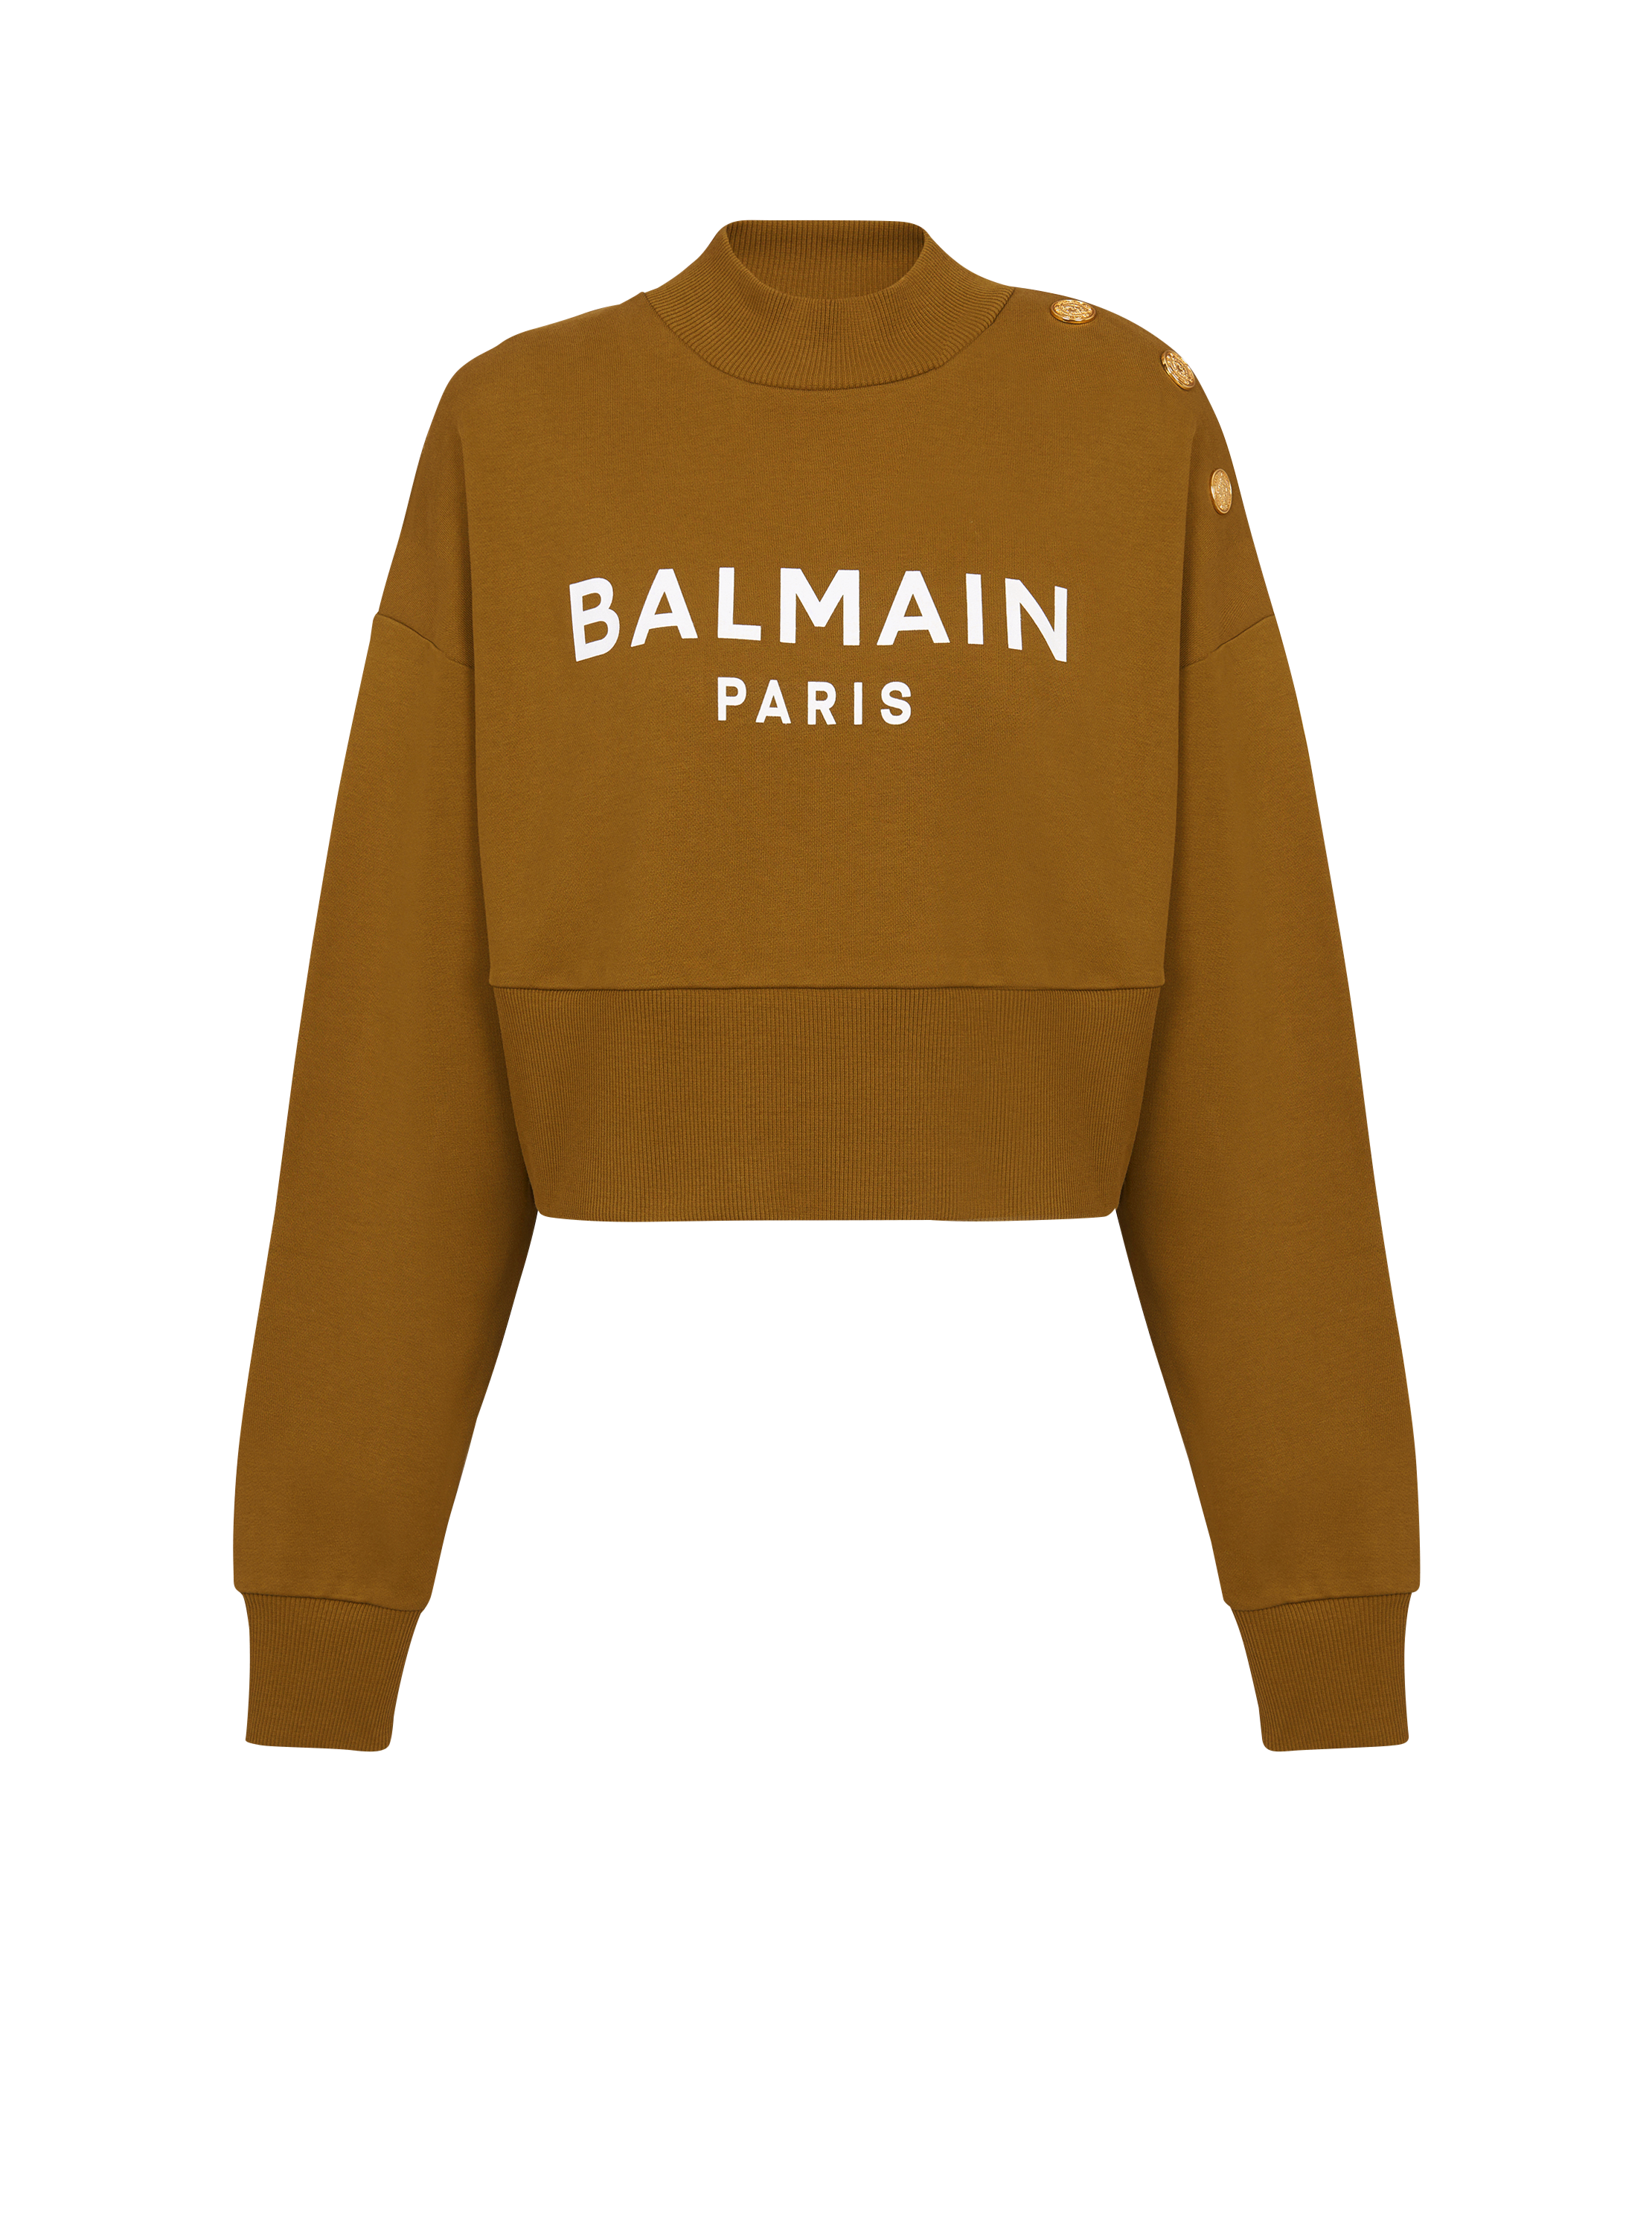 Balmain巴尔曼标志印花短款环保设计棉质运动衫, khaki, hi-res